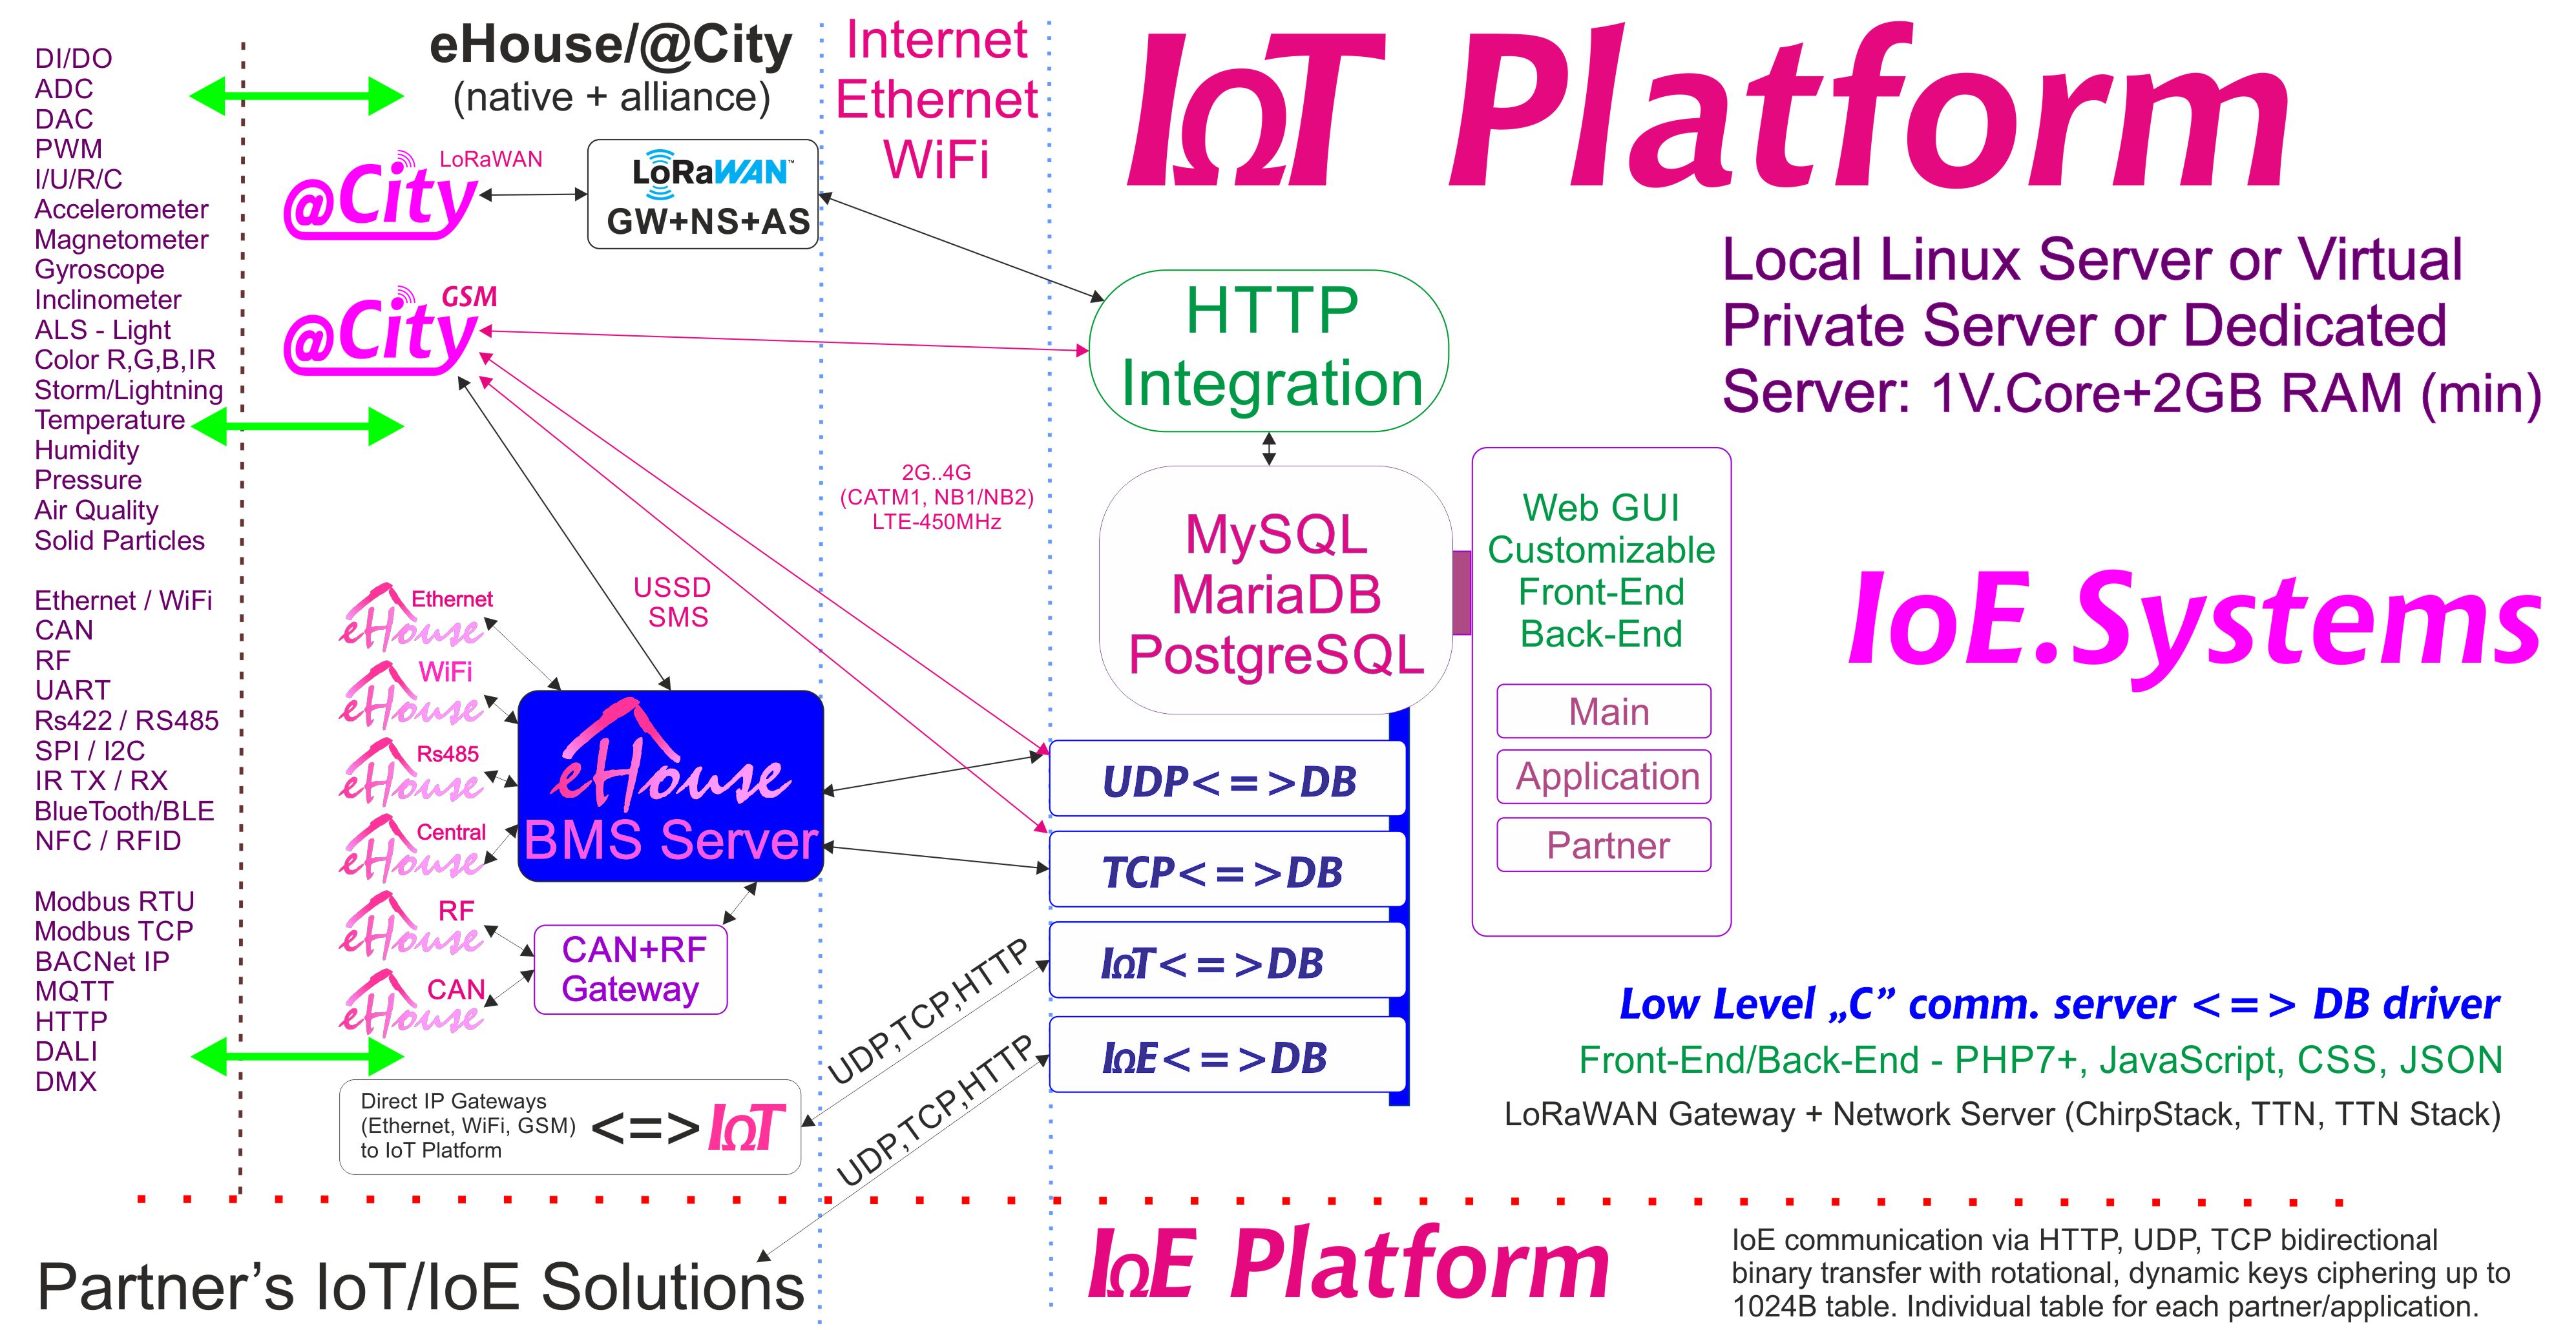 eHouse, eCity Server Software BAS, BMS, IoE, IoT Systems iyo Platform